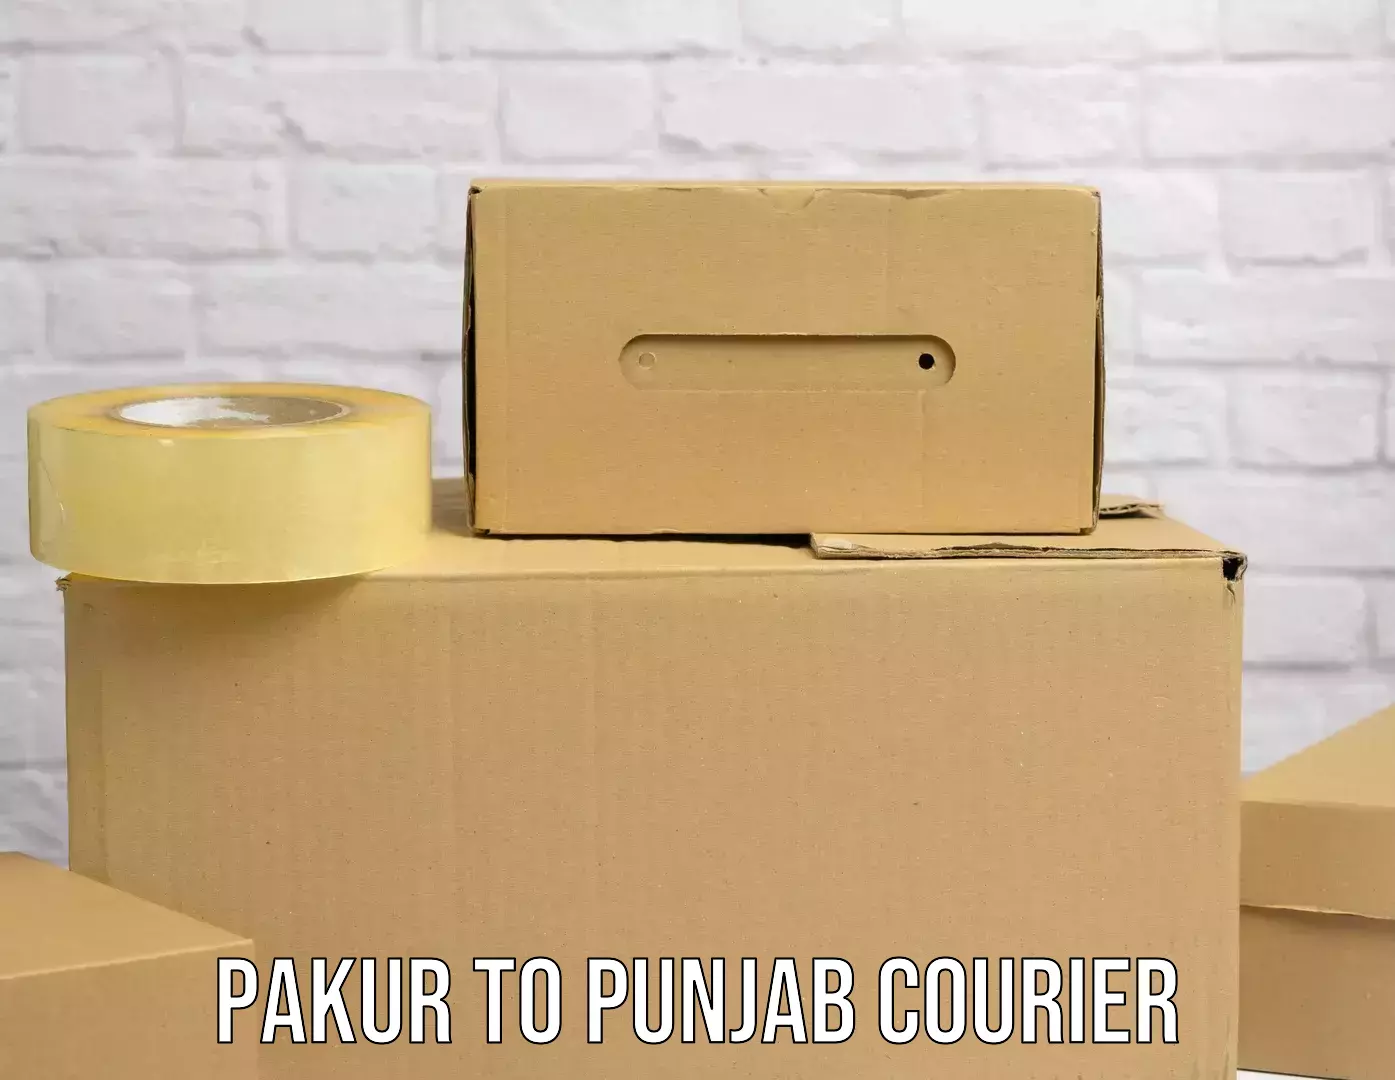 Nationwide parcel services Pakur to Punjab